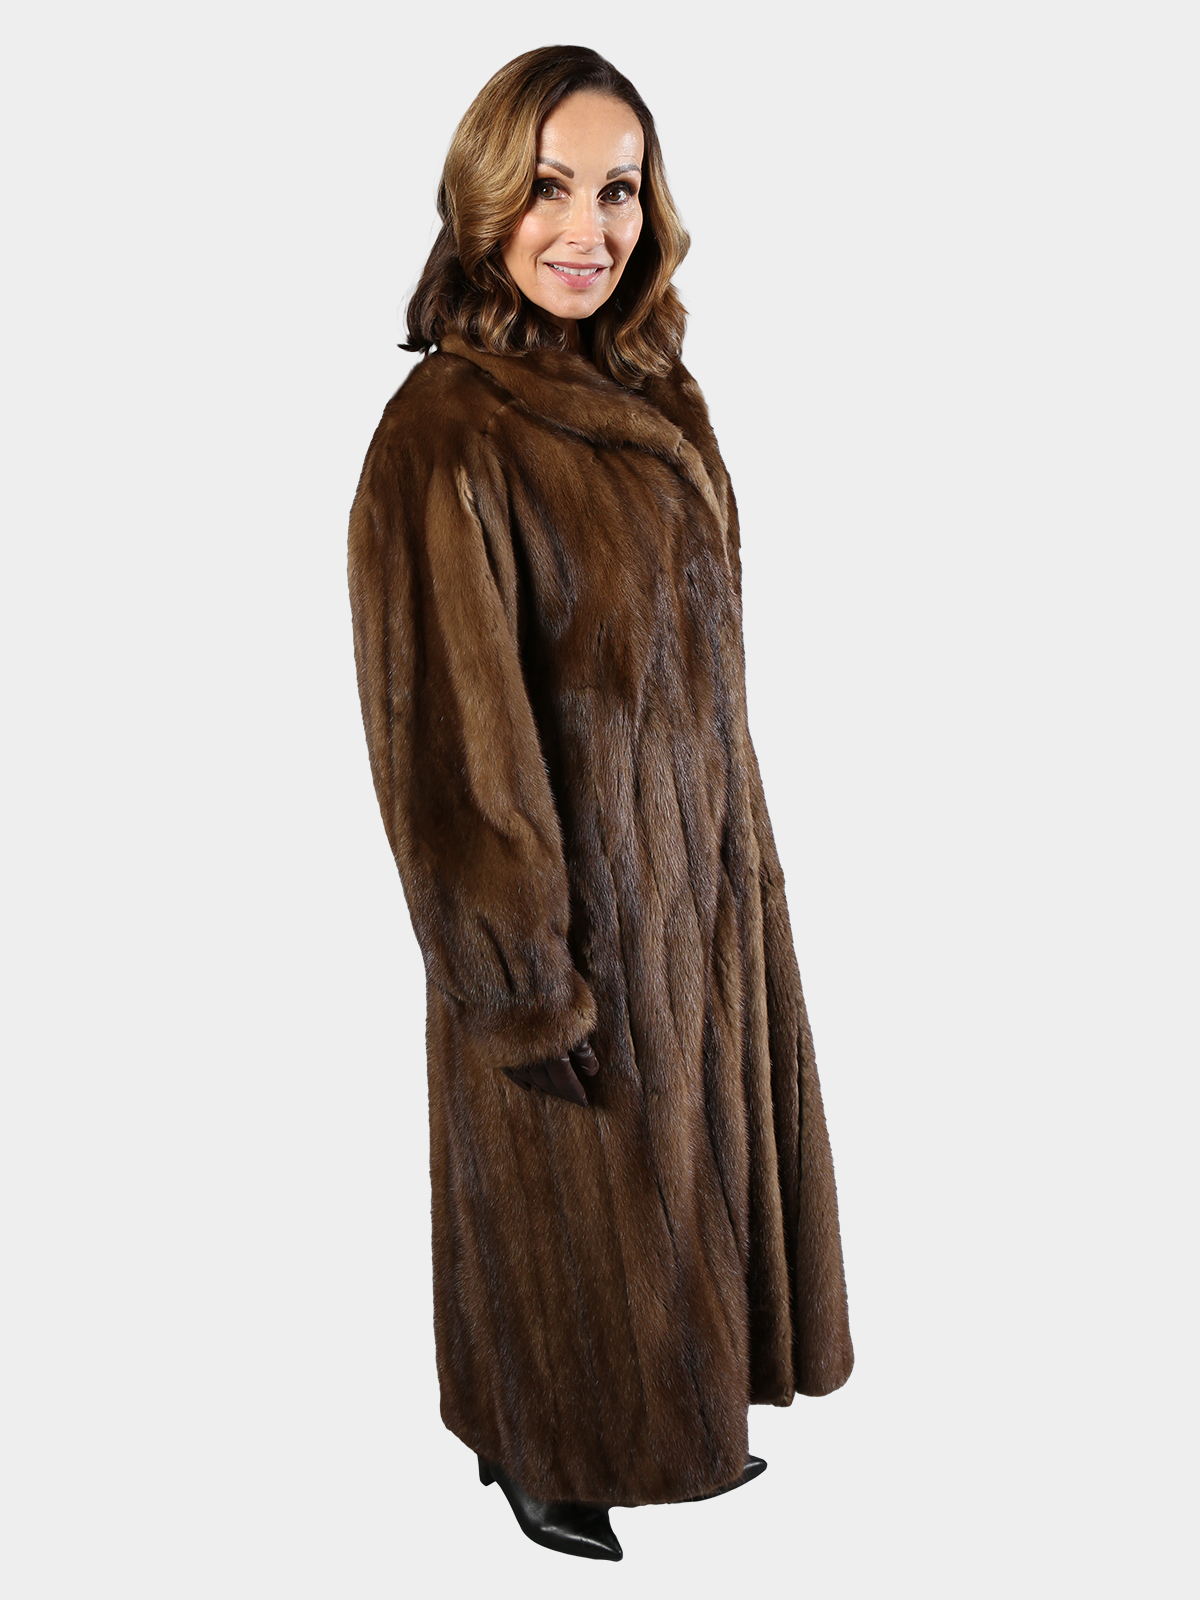 Lunaraine Mink Fur Coat (Women's Large) - Estate Furs